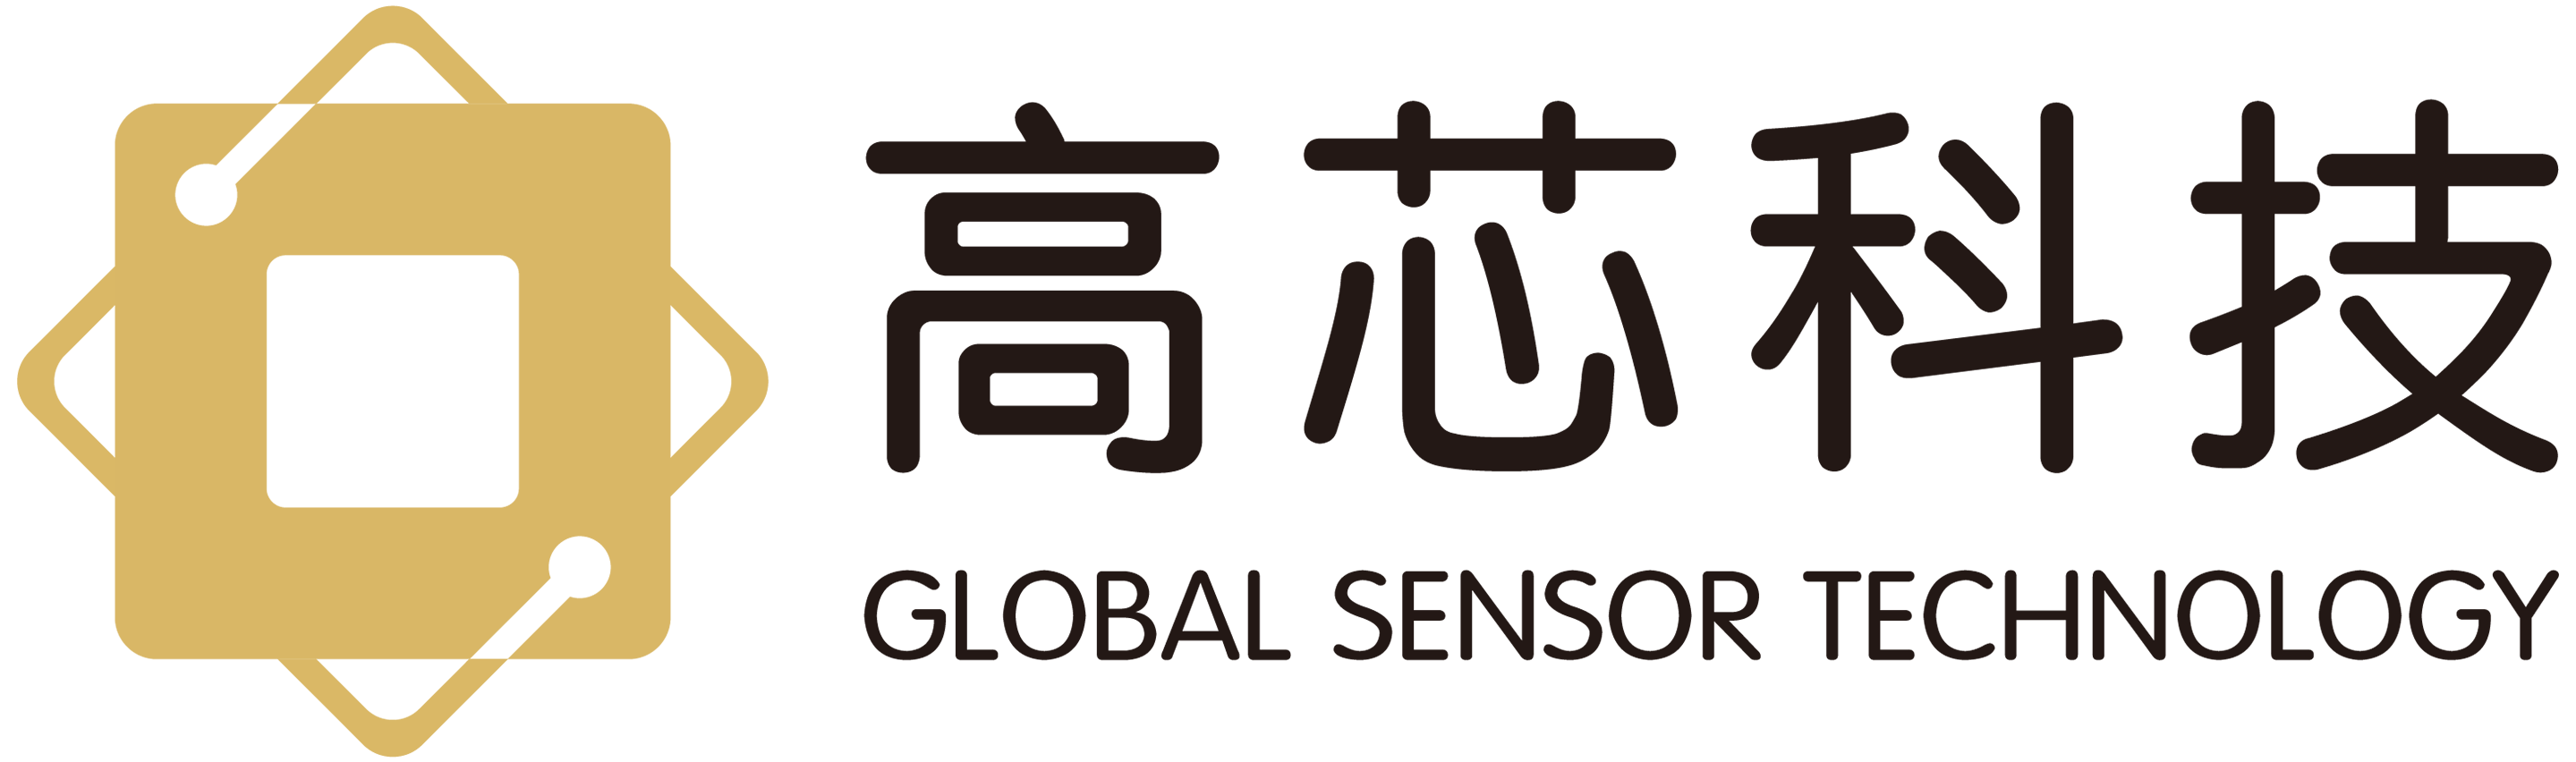 global-sensor-technology